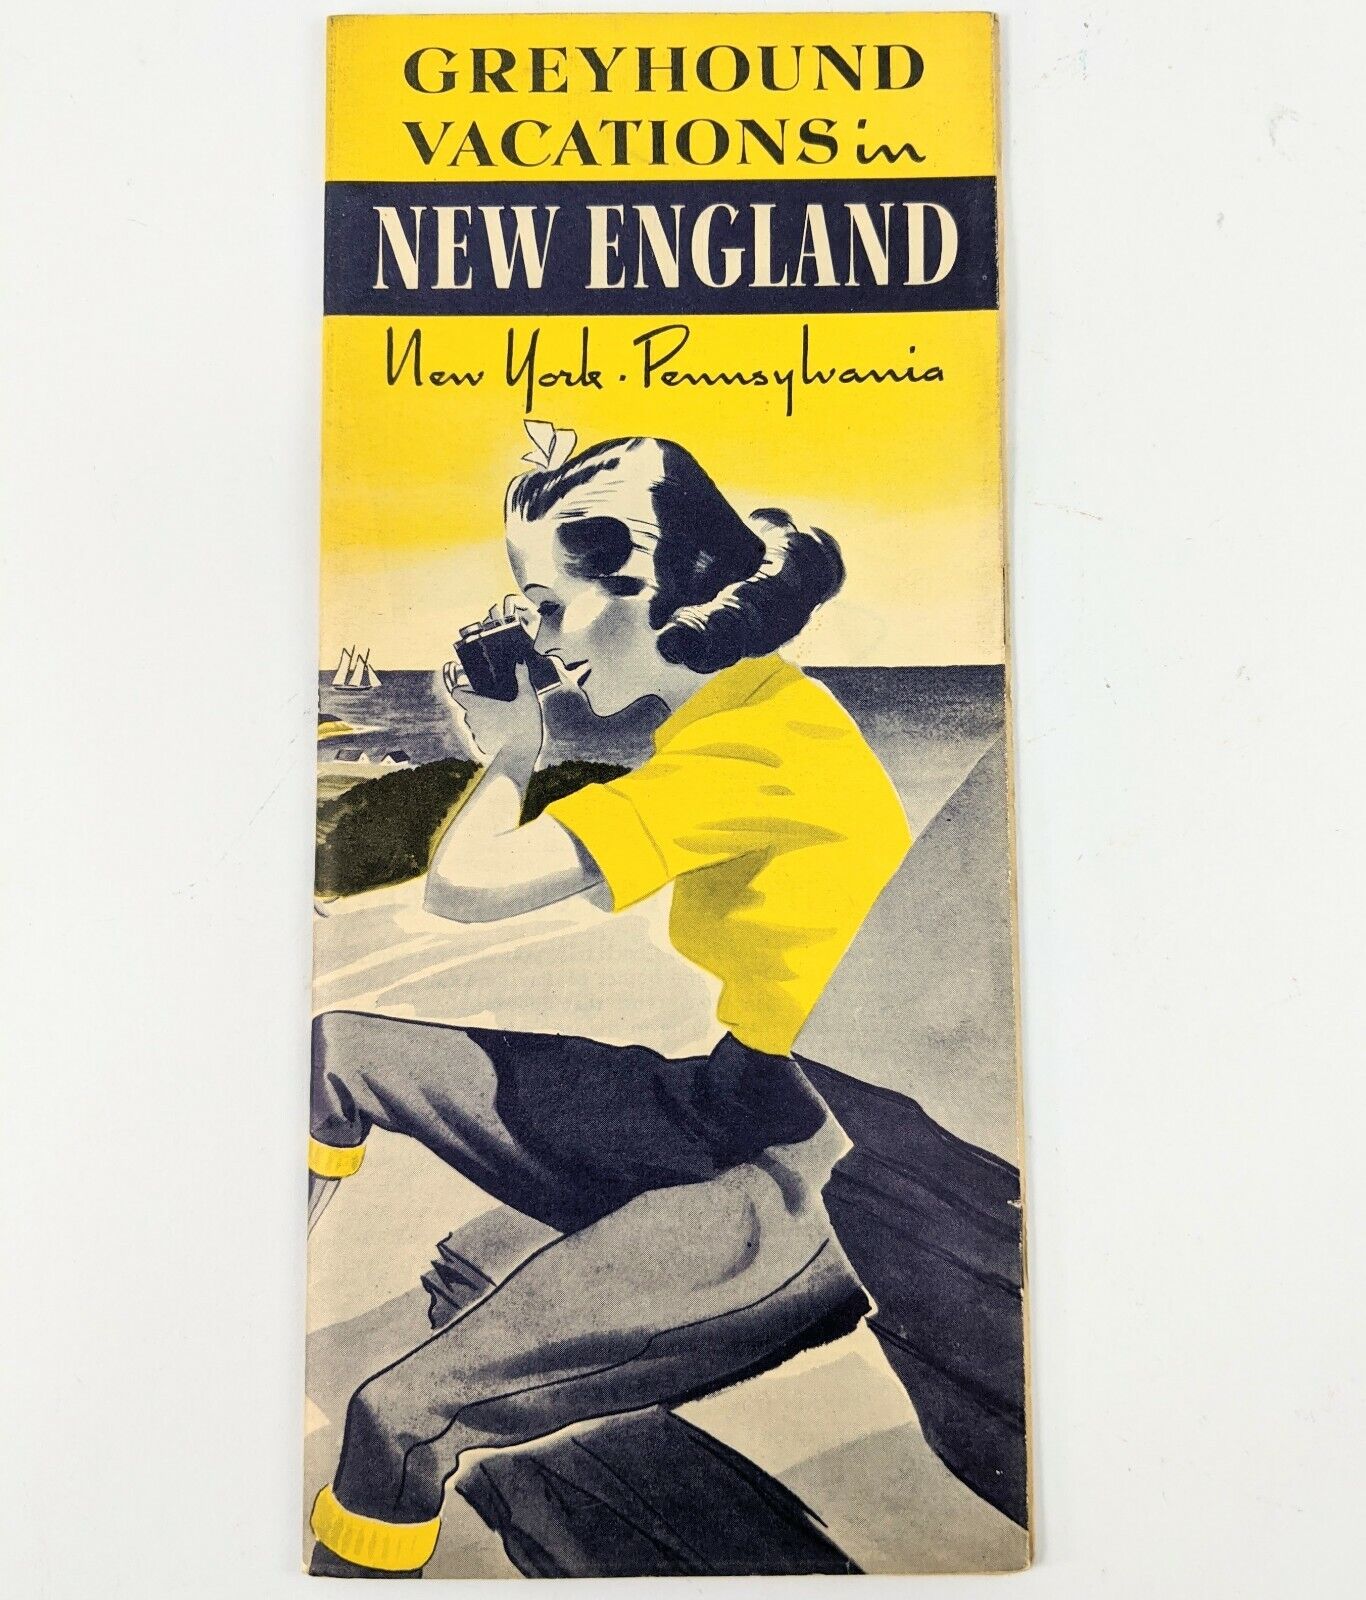 Greyhound Vacations New England New York Pennsylvania 1939 Travel Brochure